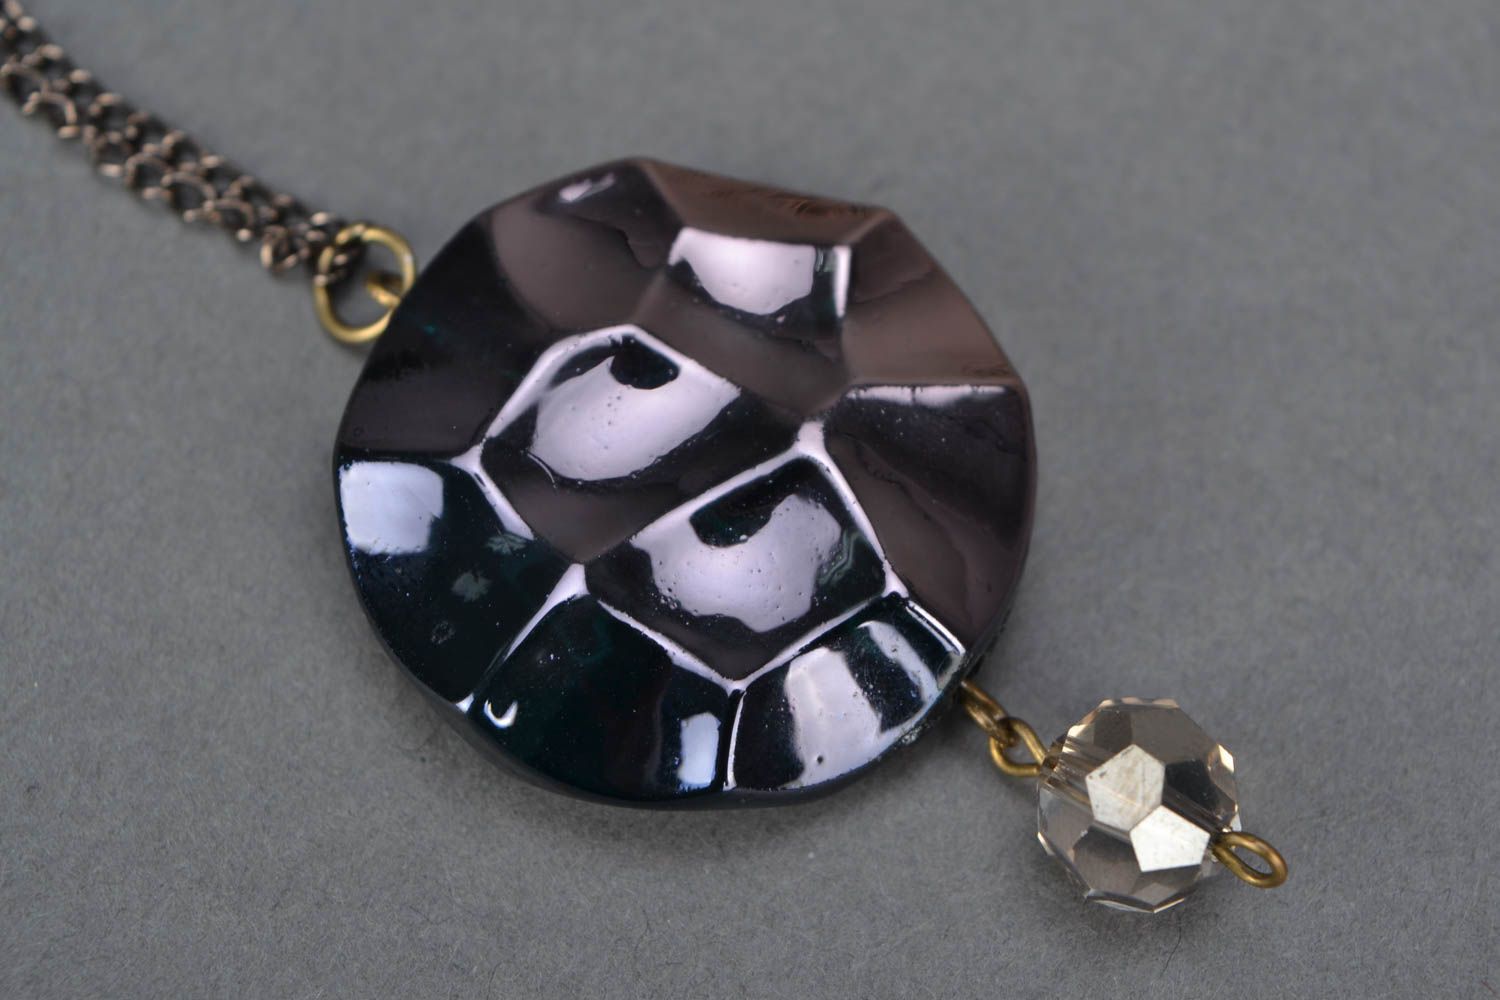 Plastic pendant with chain photo 3